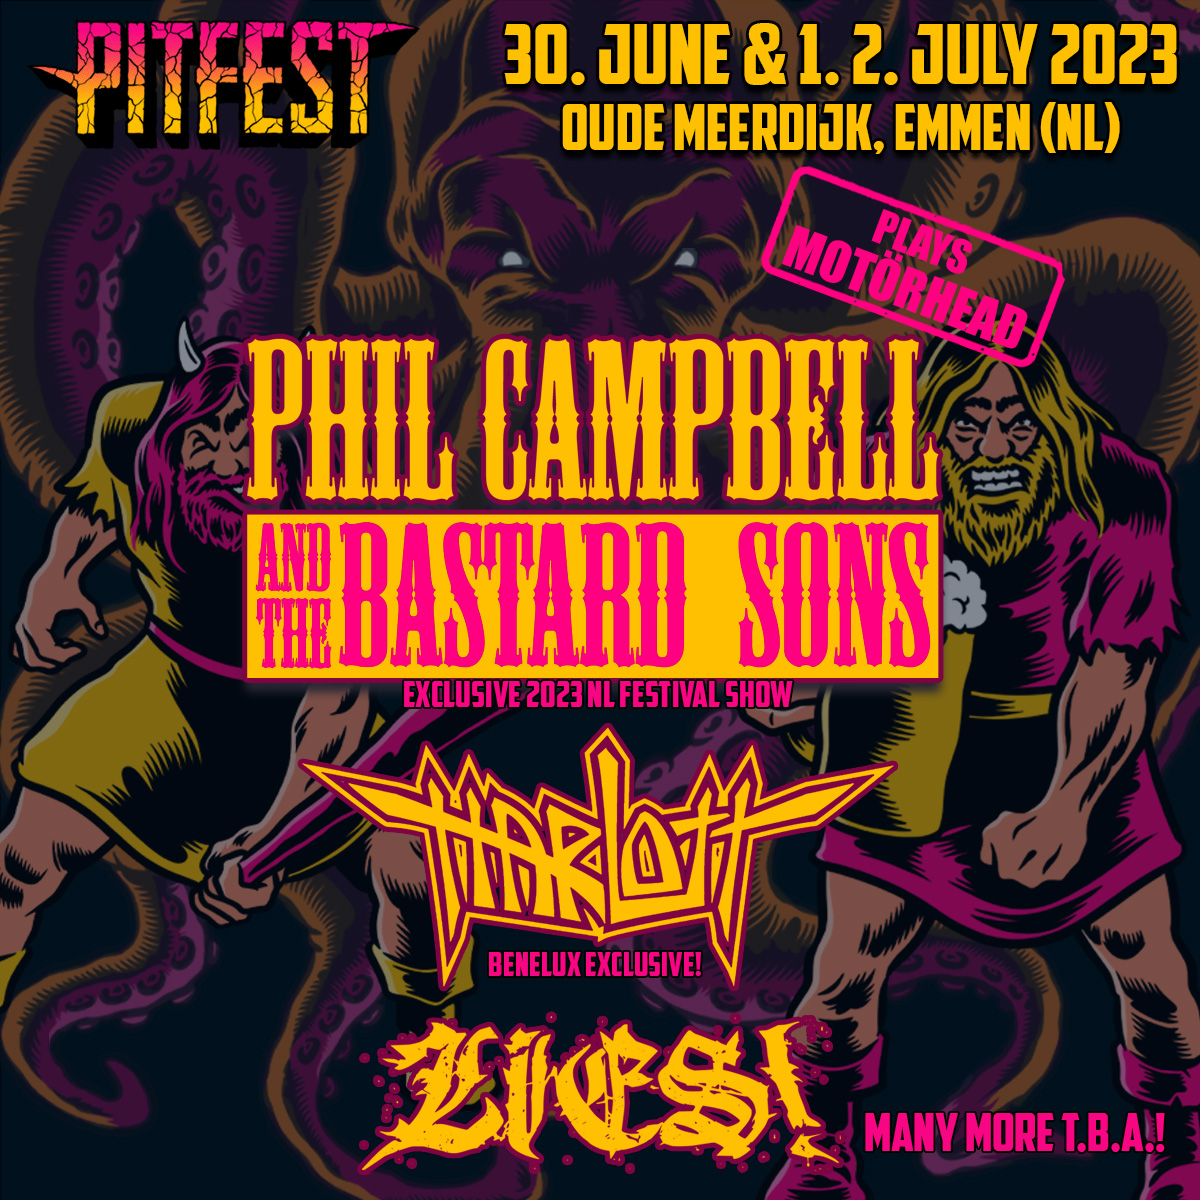 Phil Campbell & The Bastard Sons play Motörhead on Pitfest 2023